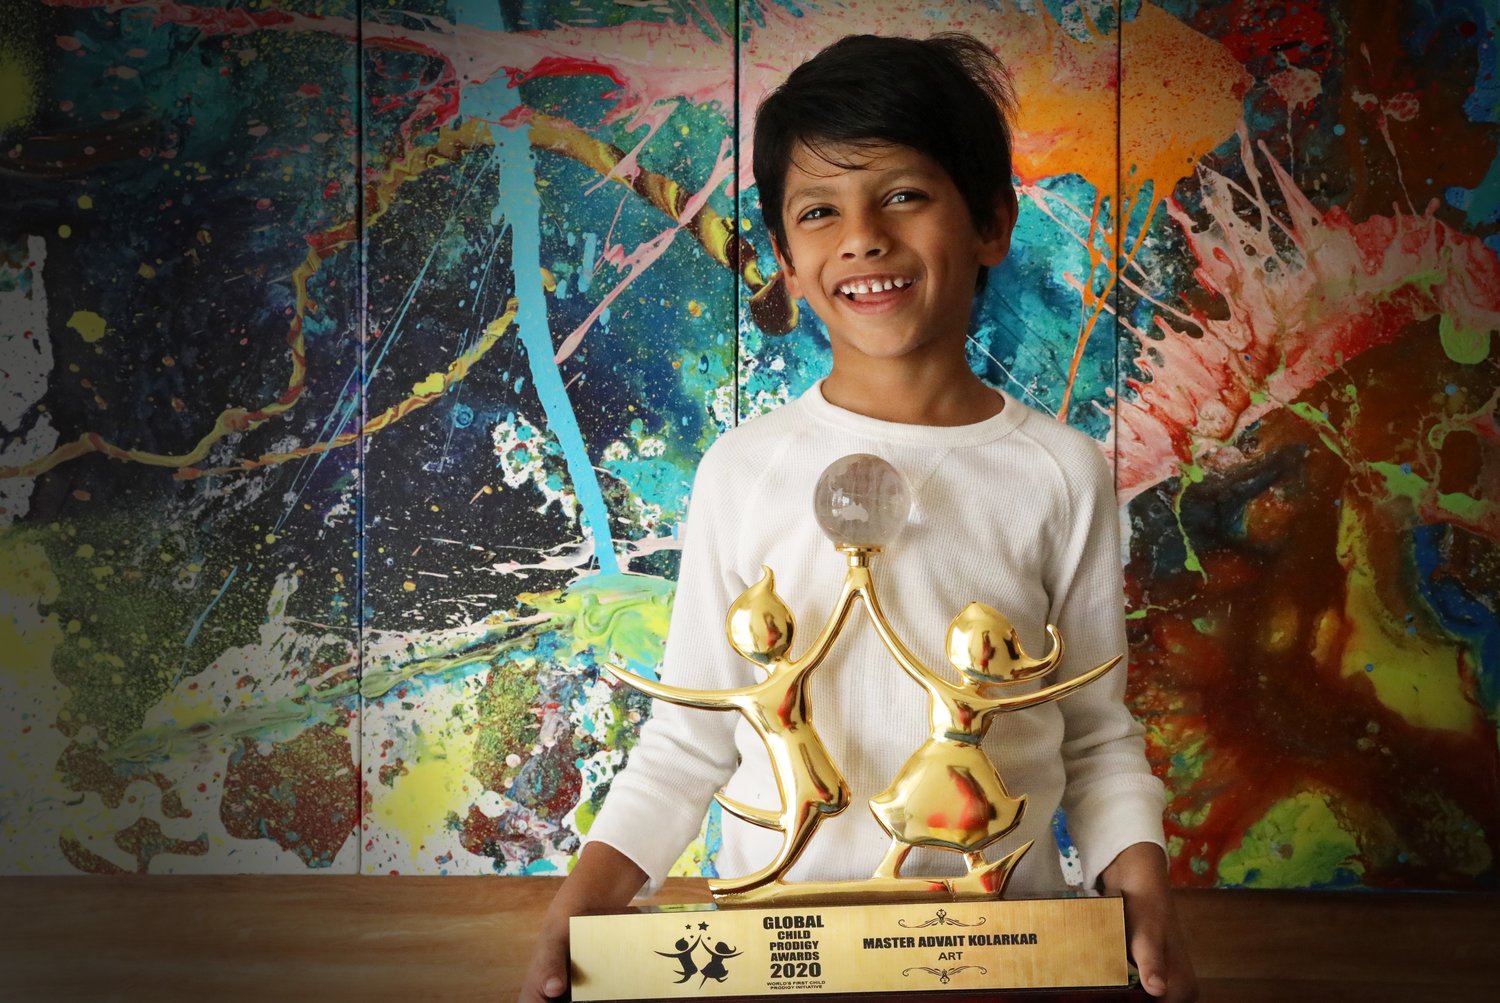 Advait Kolarkar holds up his 2020 Global Child Prodigy Award.